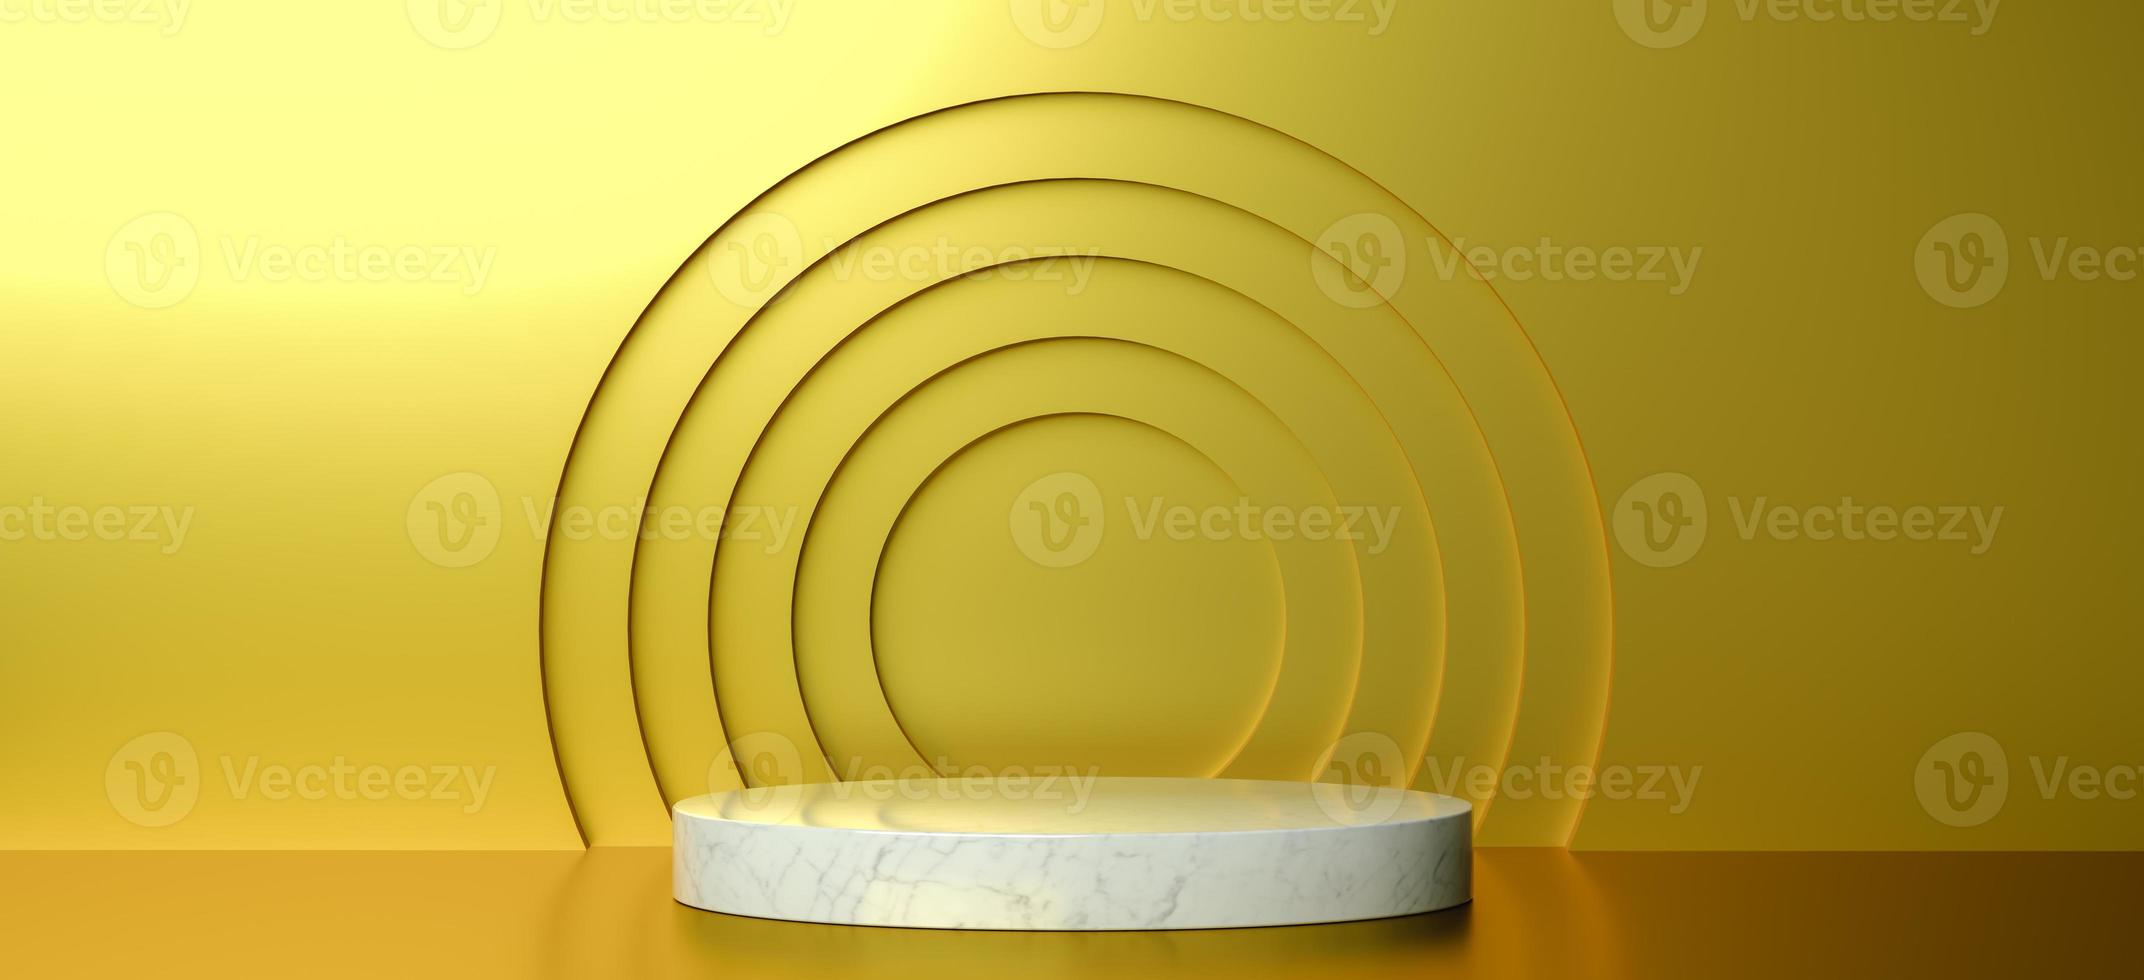 mock up geometrisk form podium för produktdesign, 3d-rendering, gyllene foto